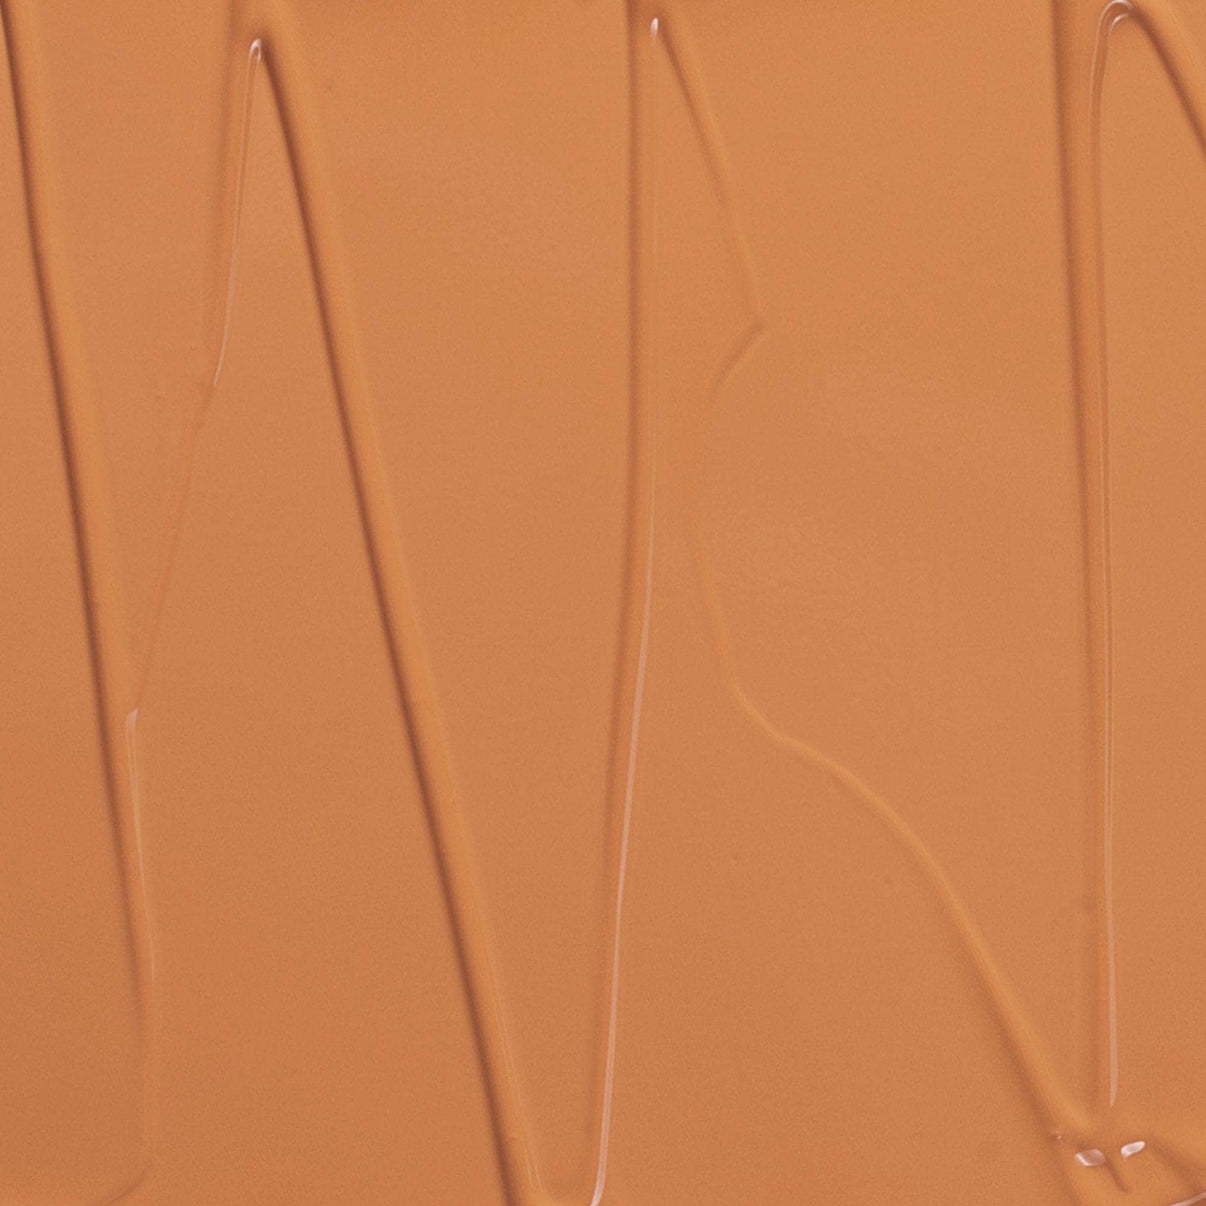 Nudefix cream concealer in shade nude 8 texture swatch